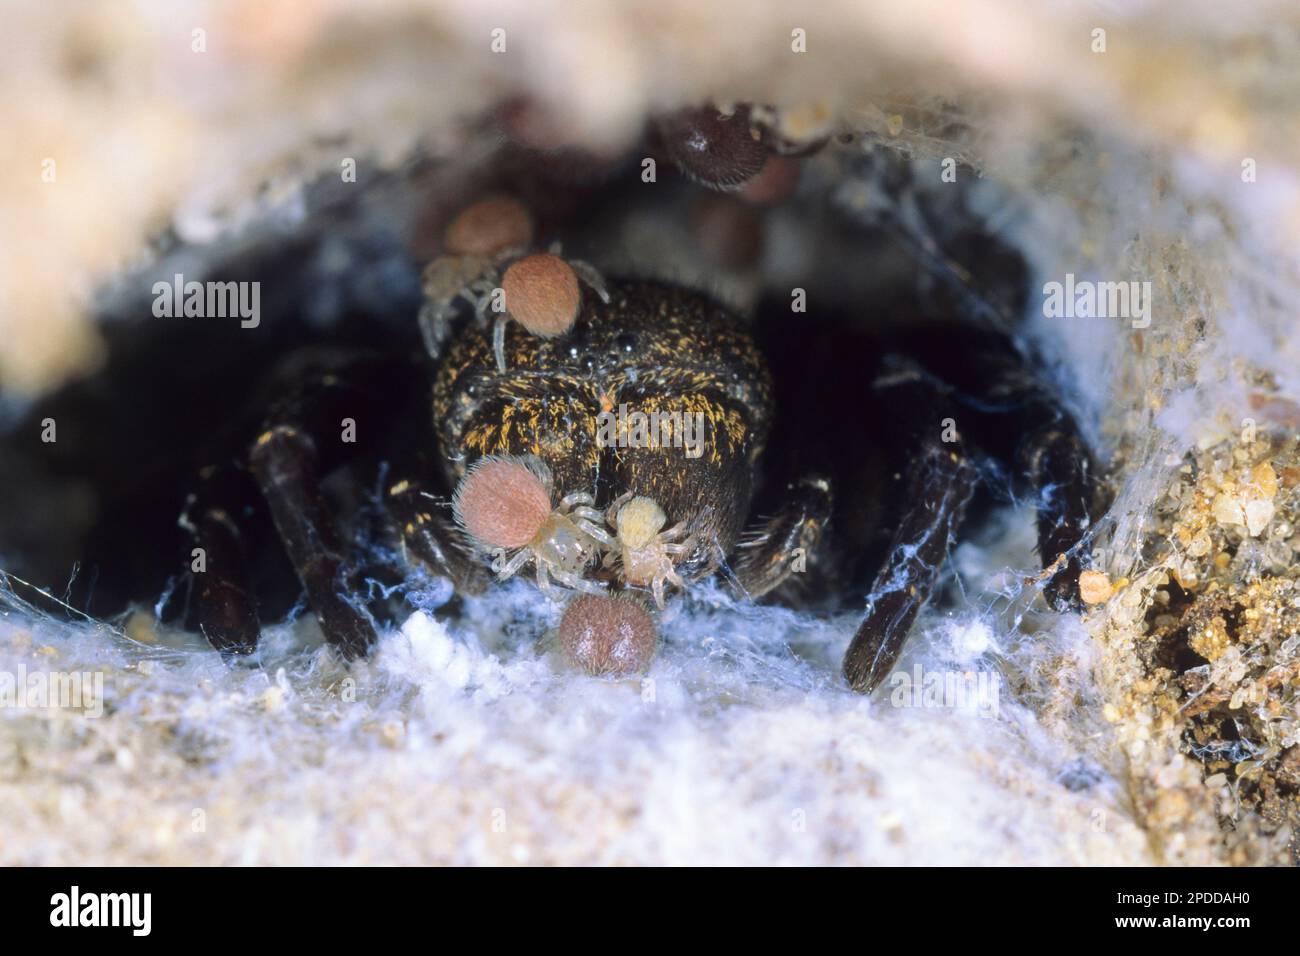 ladybird spider (Eresus kollari, Eresus cinnaberinus, Eresus niger), female mit juveniles, front view, Germany Stock Photo